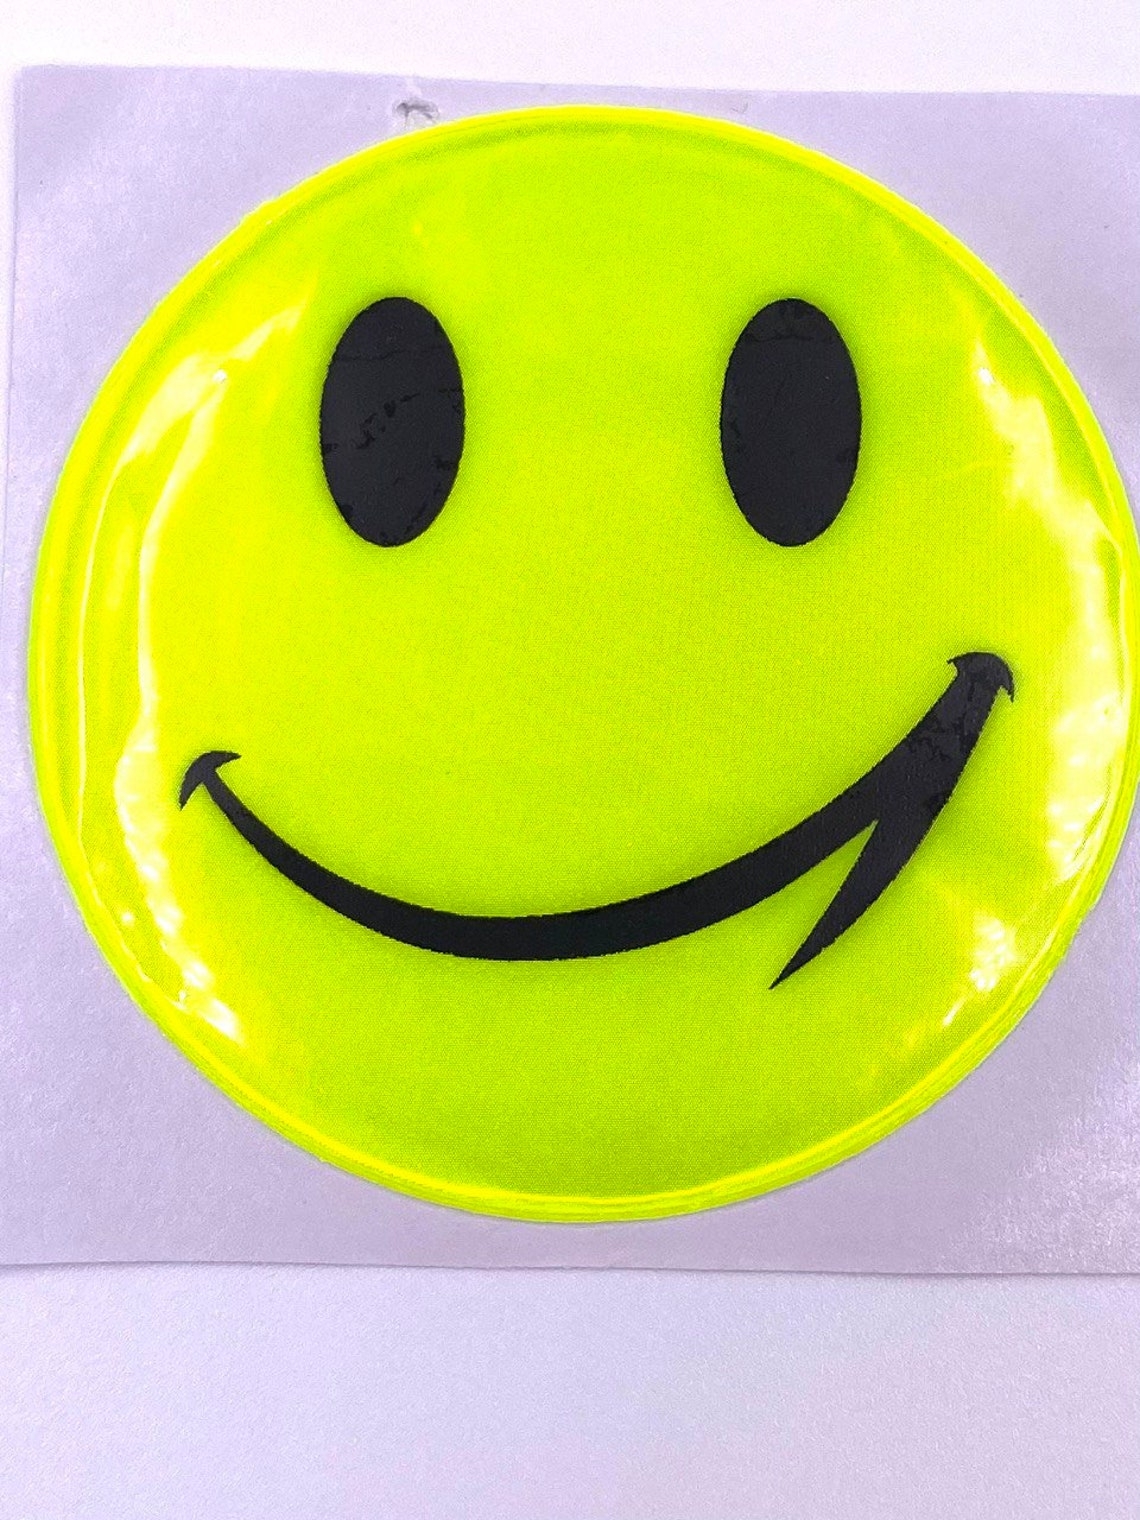 Reflektierende Aufkleber Smile Kinder Schule Set 6 Stück - 4.95 € →  Kurzwaren ✄